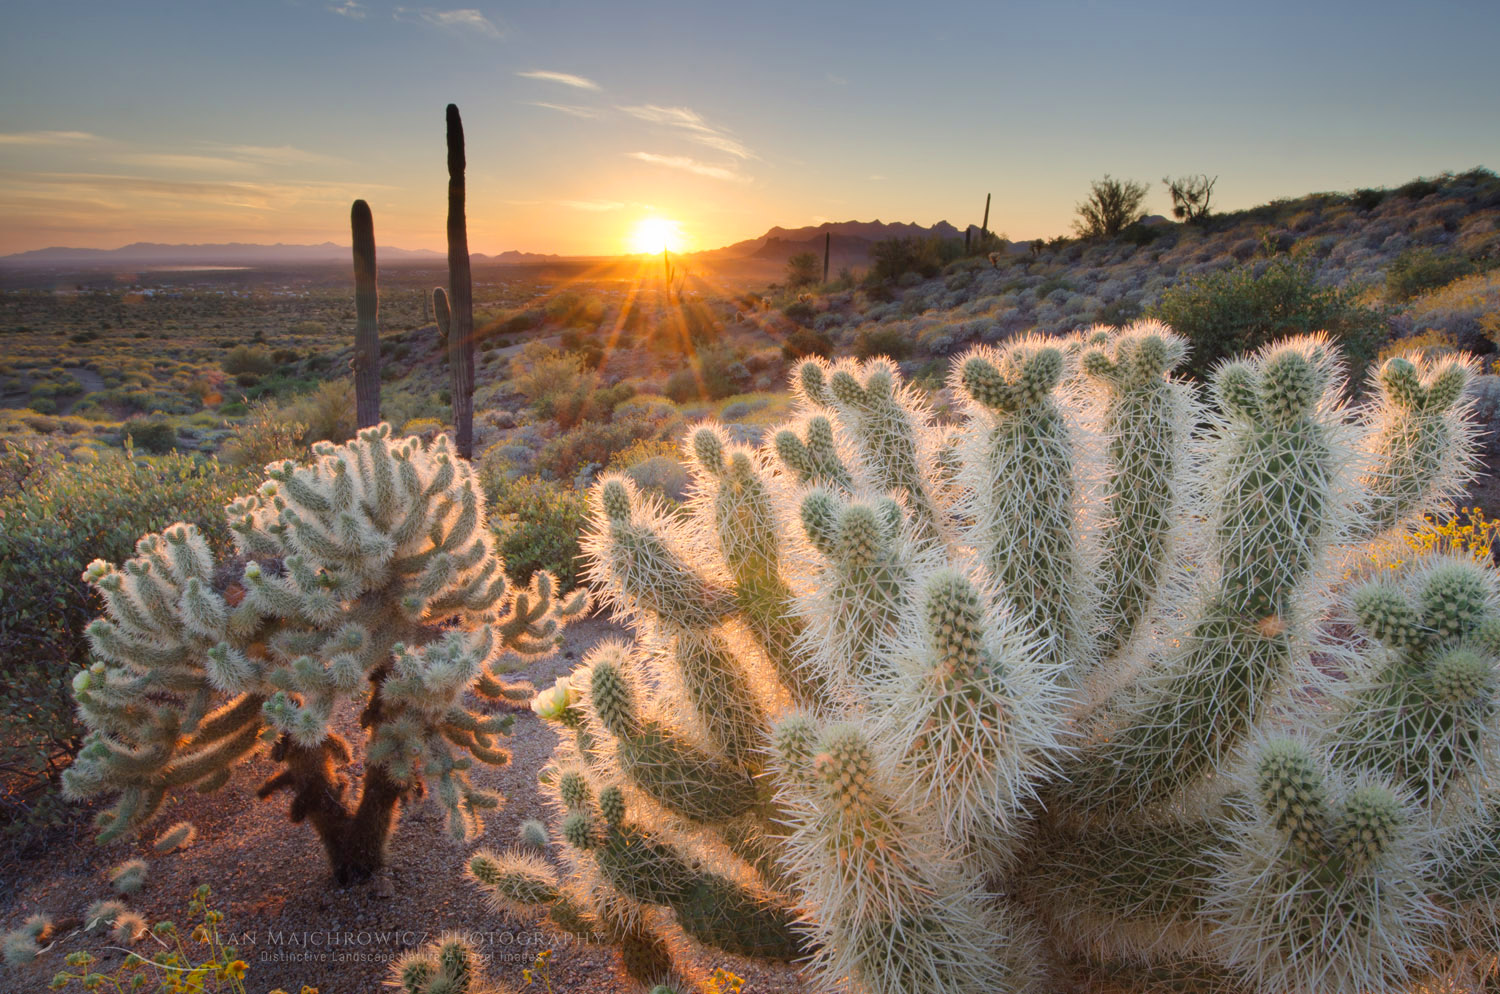 Teddy Bear Cholla cactus (Cylindropuntia bigelovii) illuminated by the setting sun, Superstition Mountains Arizona #55462